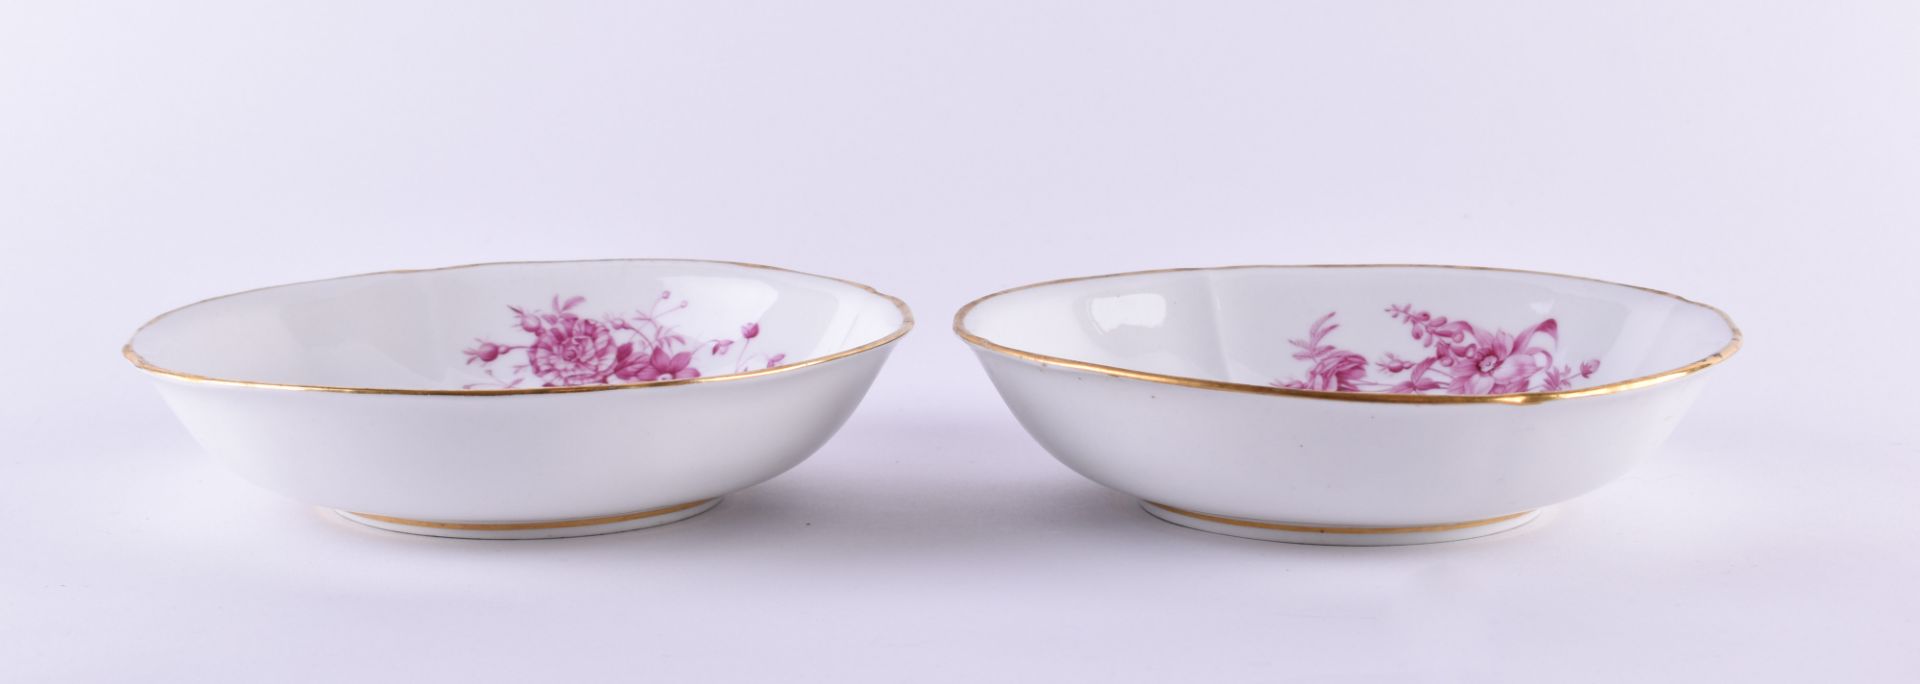 2 bowls KPM Berlin 19th century - Image 2 of 3